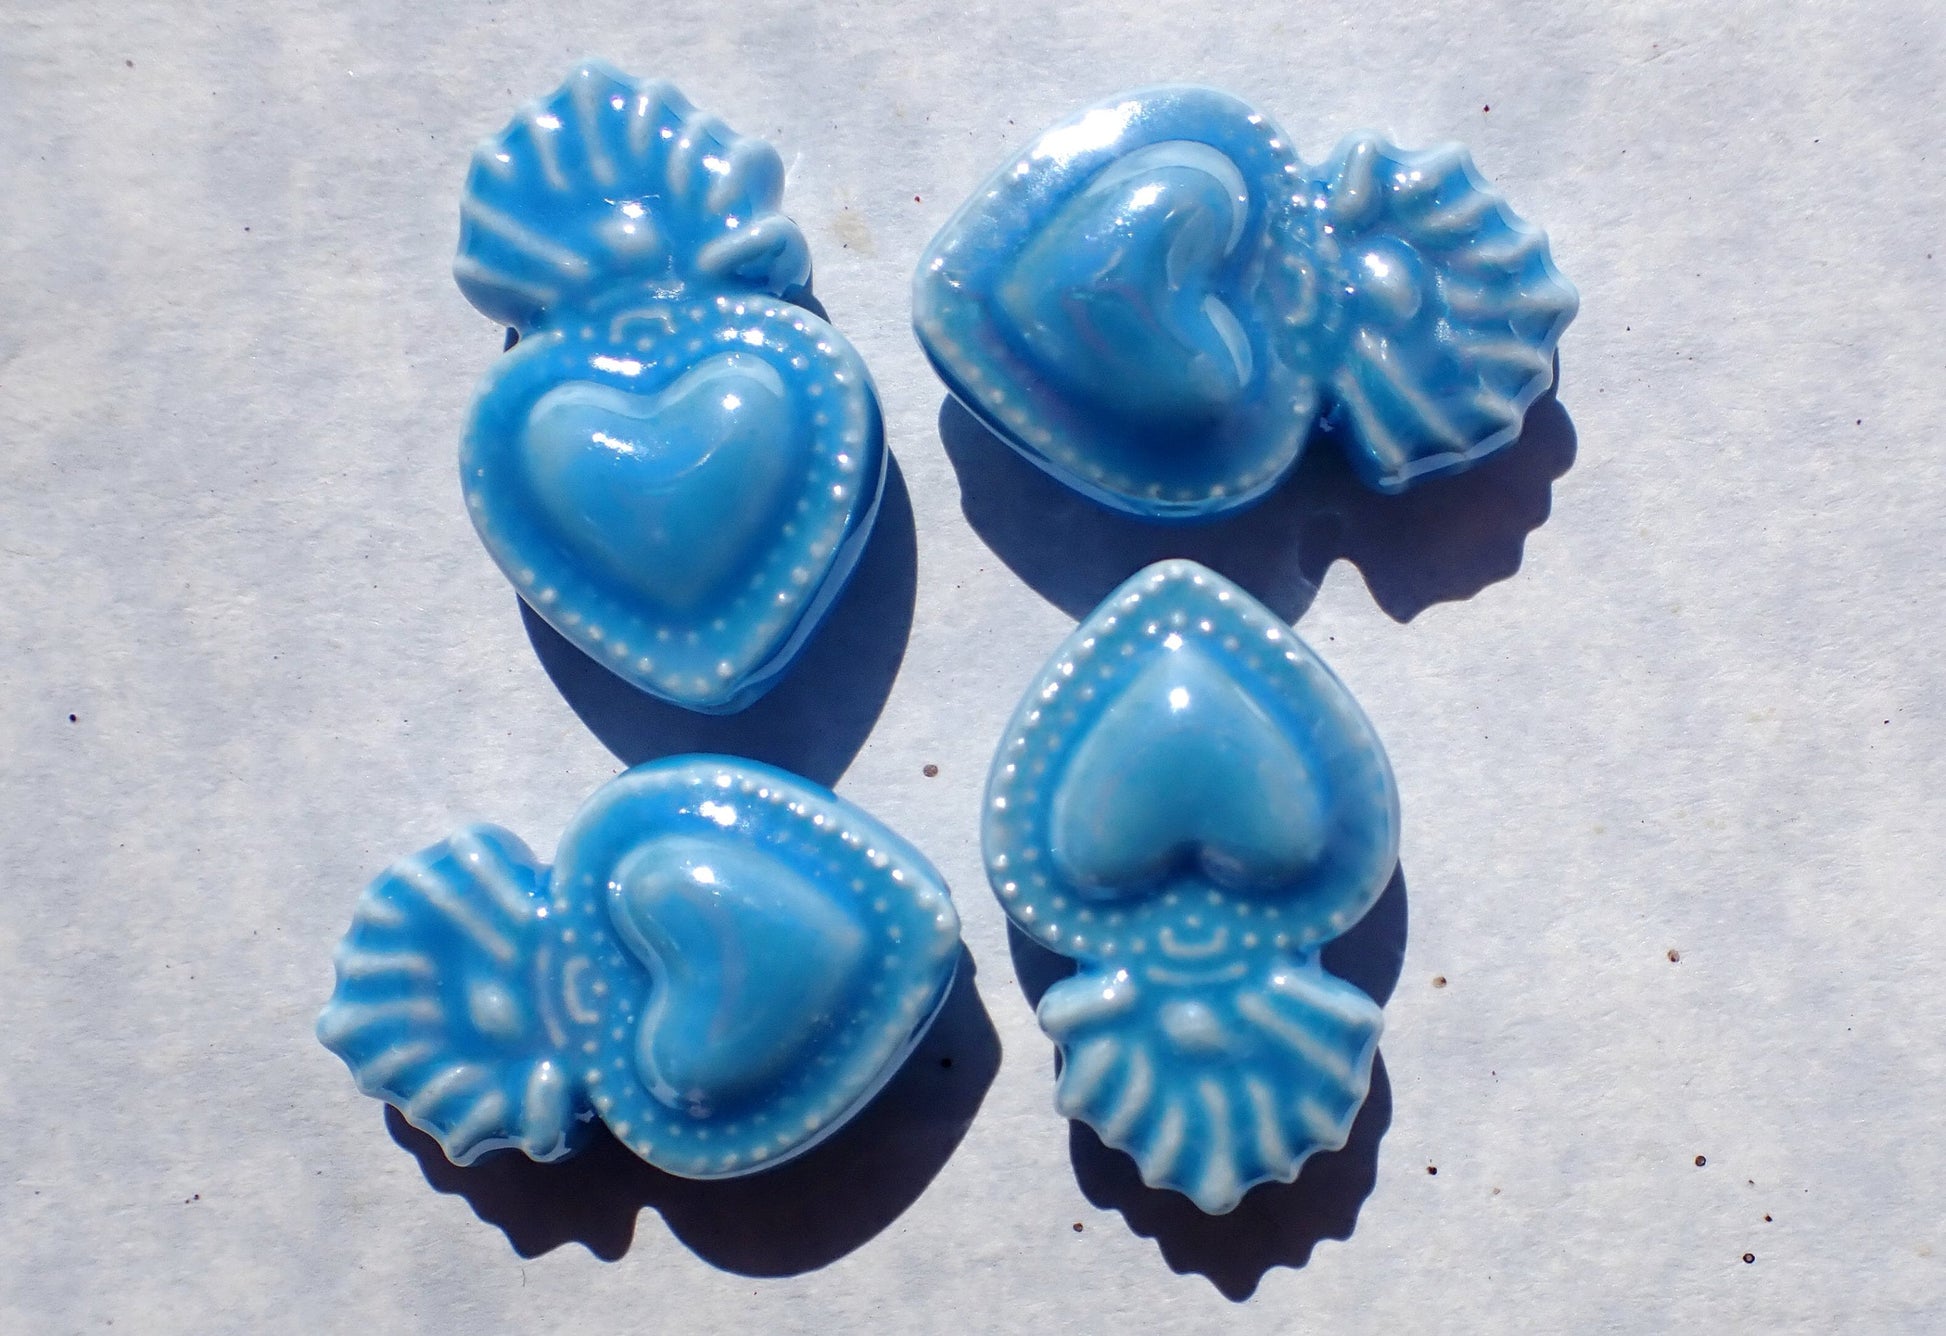 Medium Blue Milagro Heart Beads - Ceramic Mosaic Tiles - Small Sacred Heart Beads - Jewelry Supplies